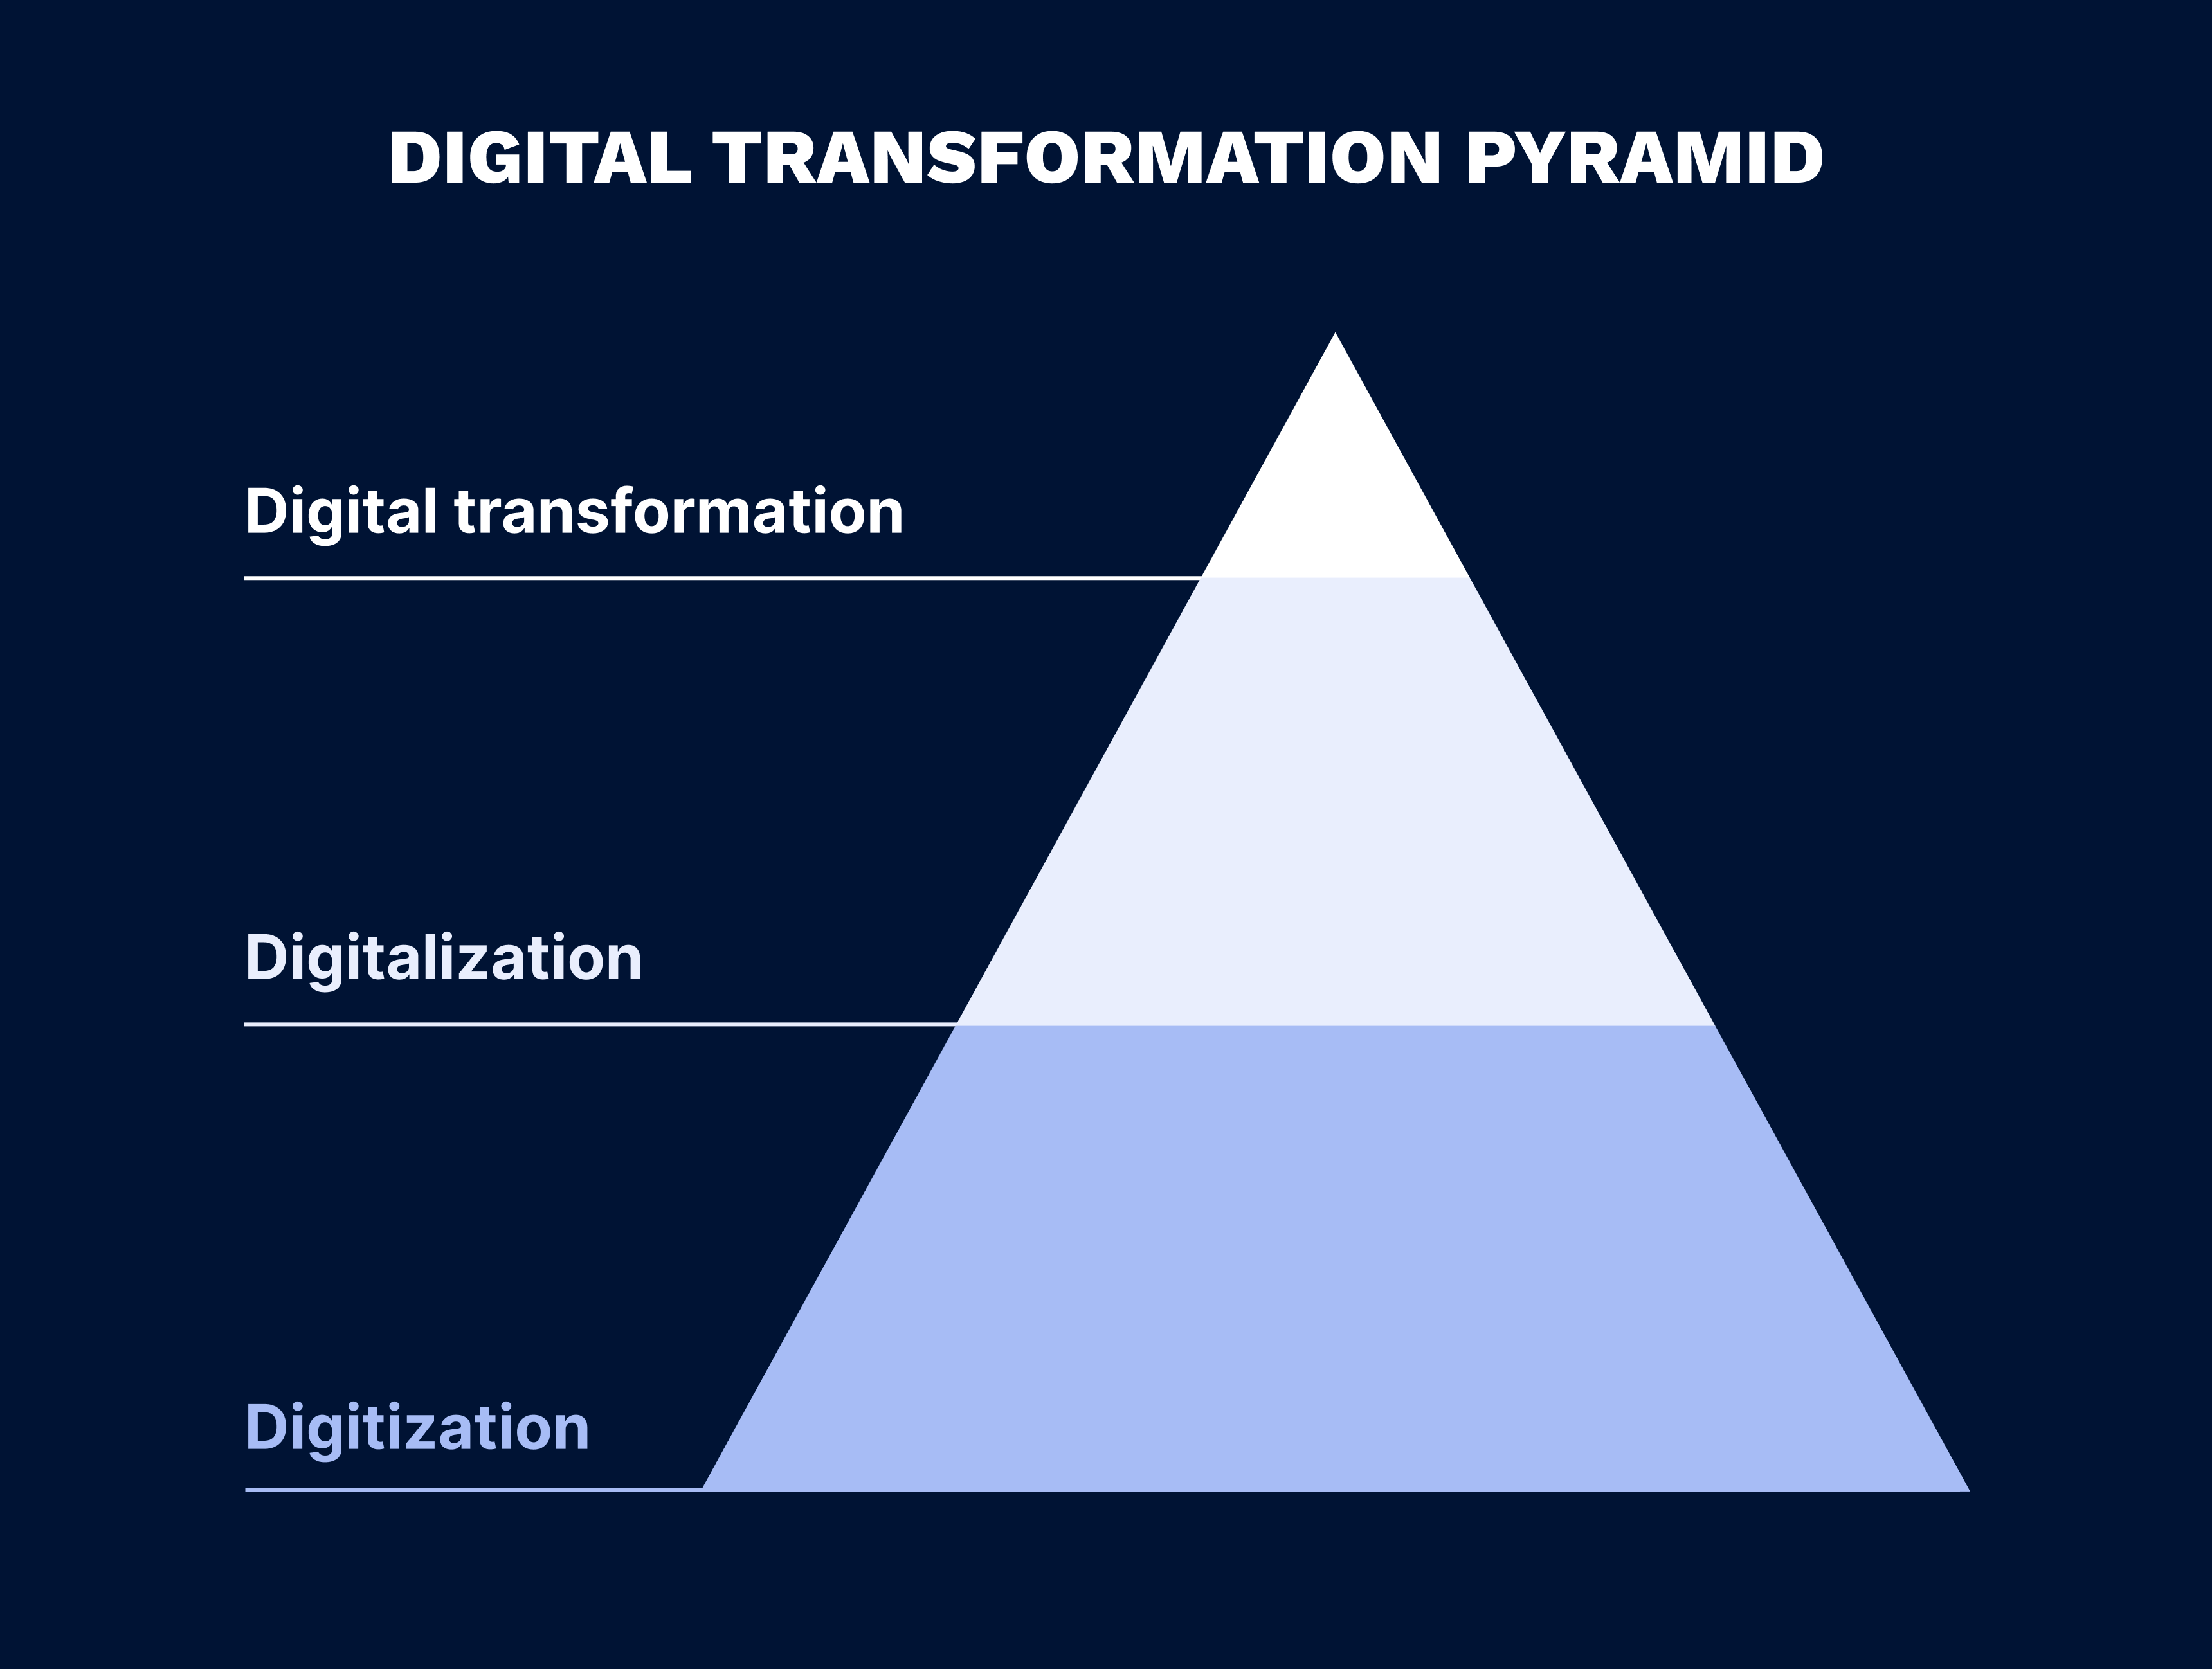 Digital transformation pyramid